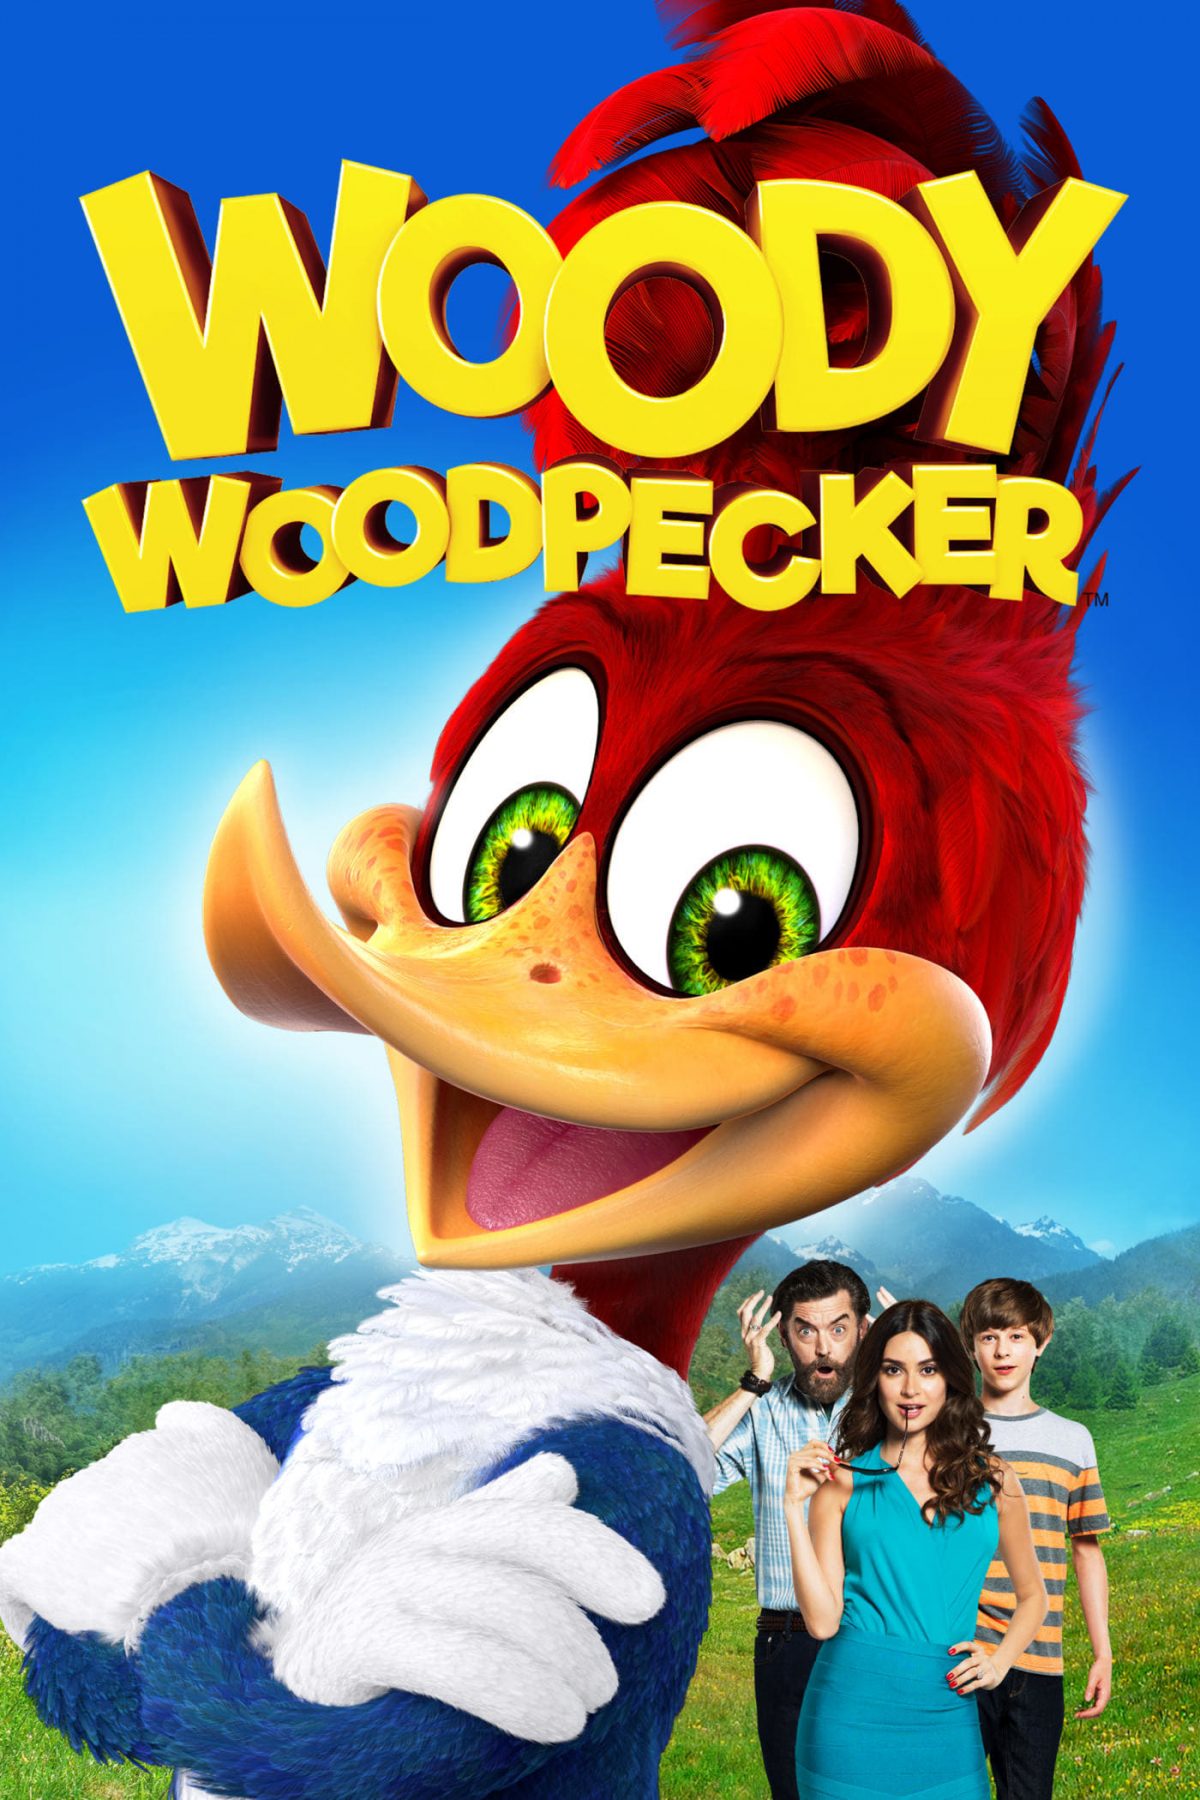 [Movie] Woody Woodpecker